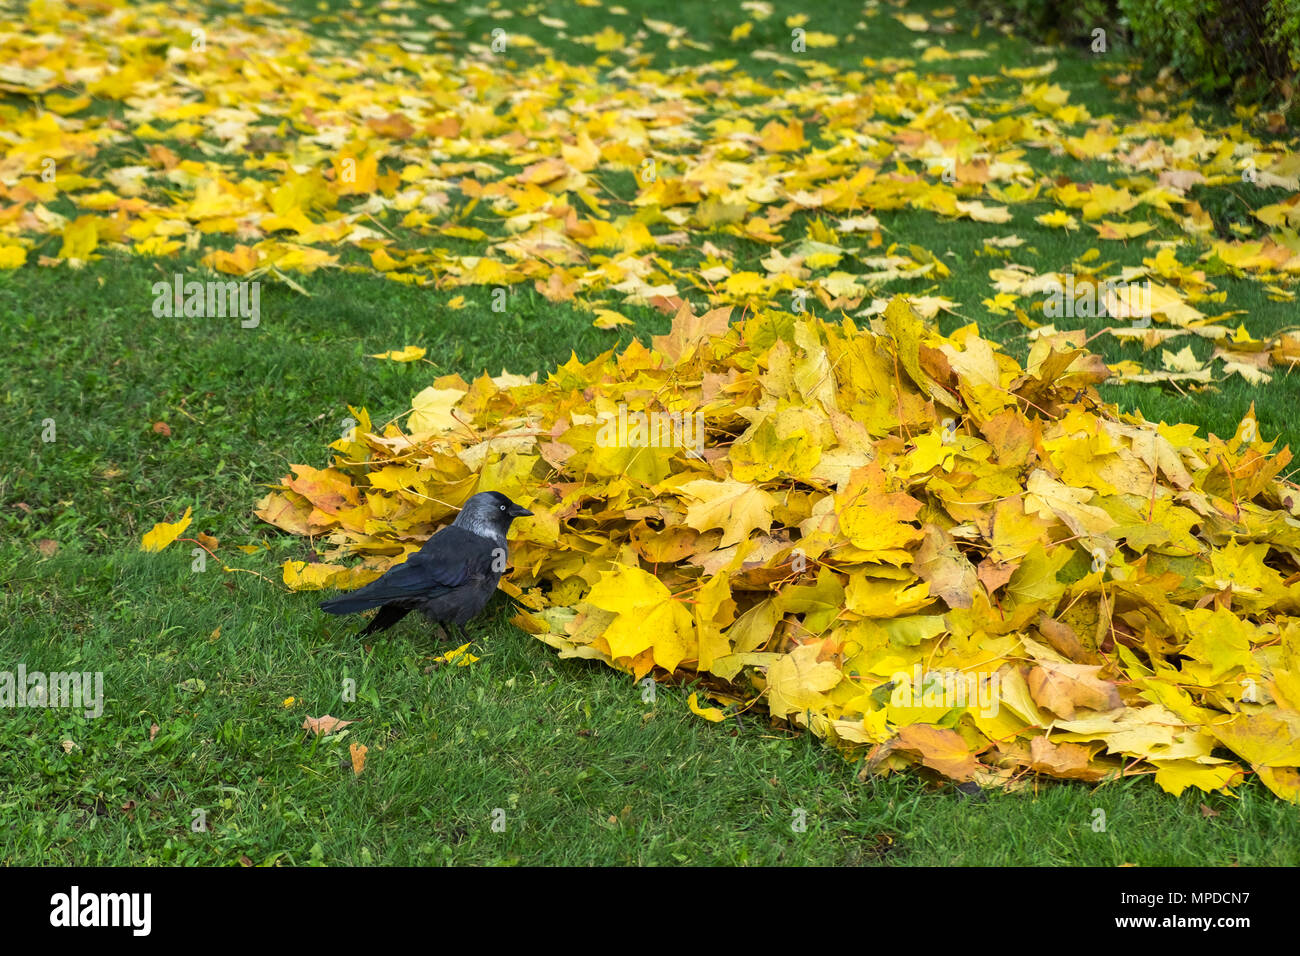 Western jackdaw (Coloeus Monedula) standing on green lawn among yellow autumn maple leaves. Single wild bird looking for feed. City fauna. Stock Photo